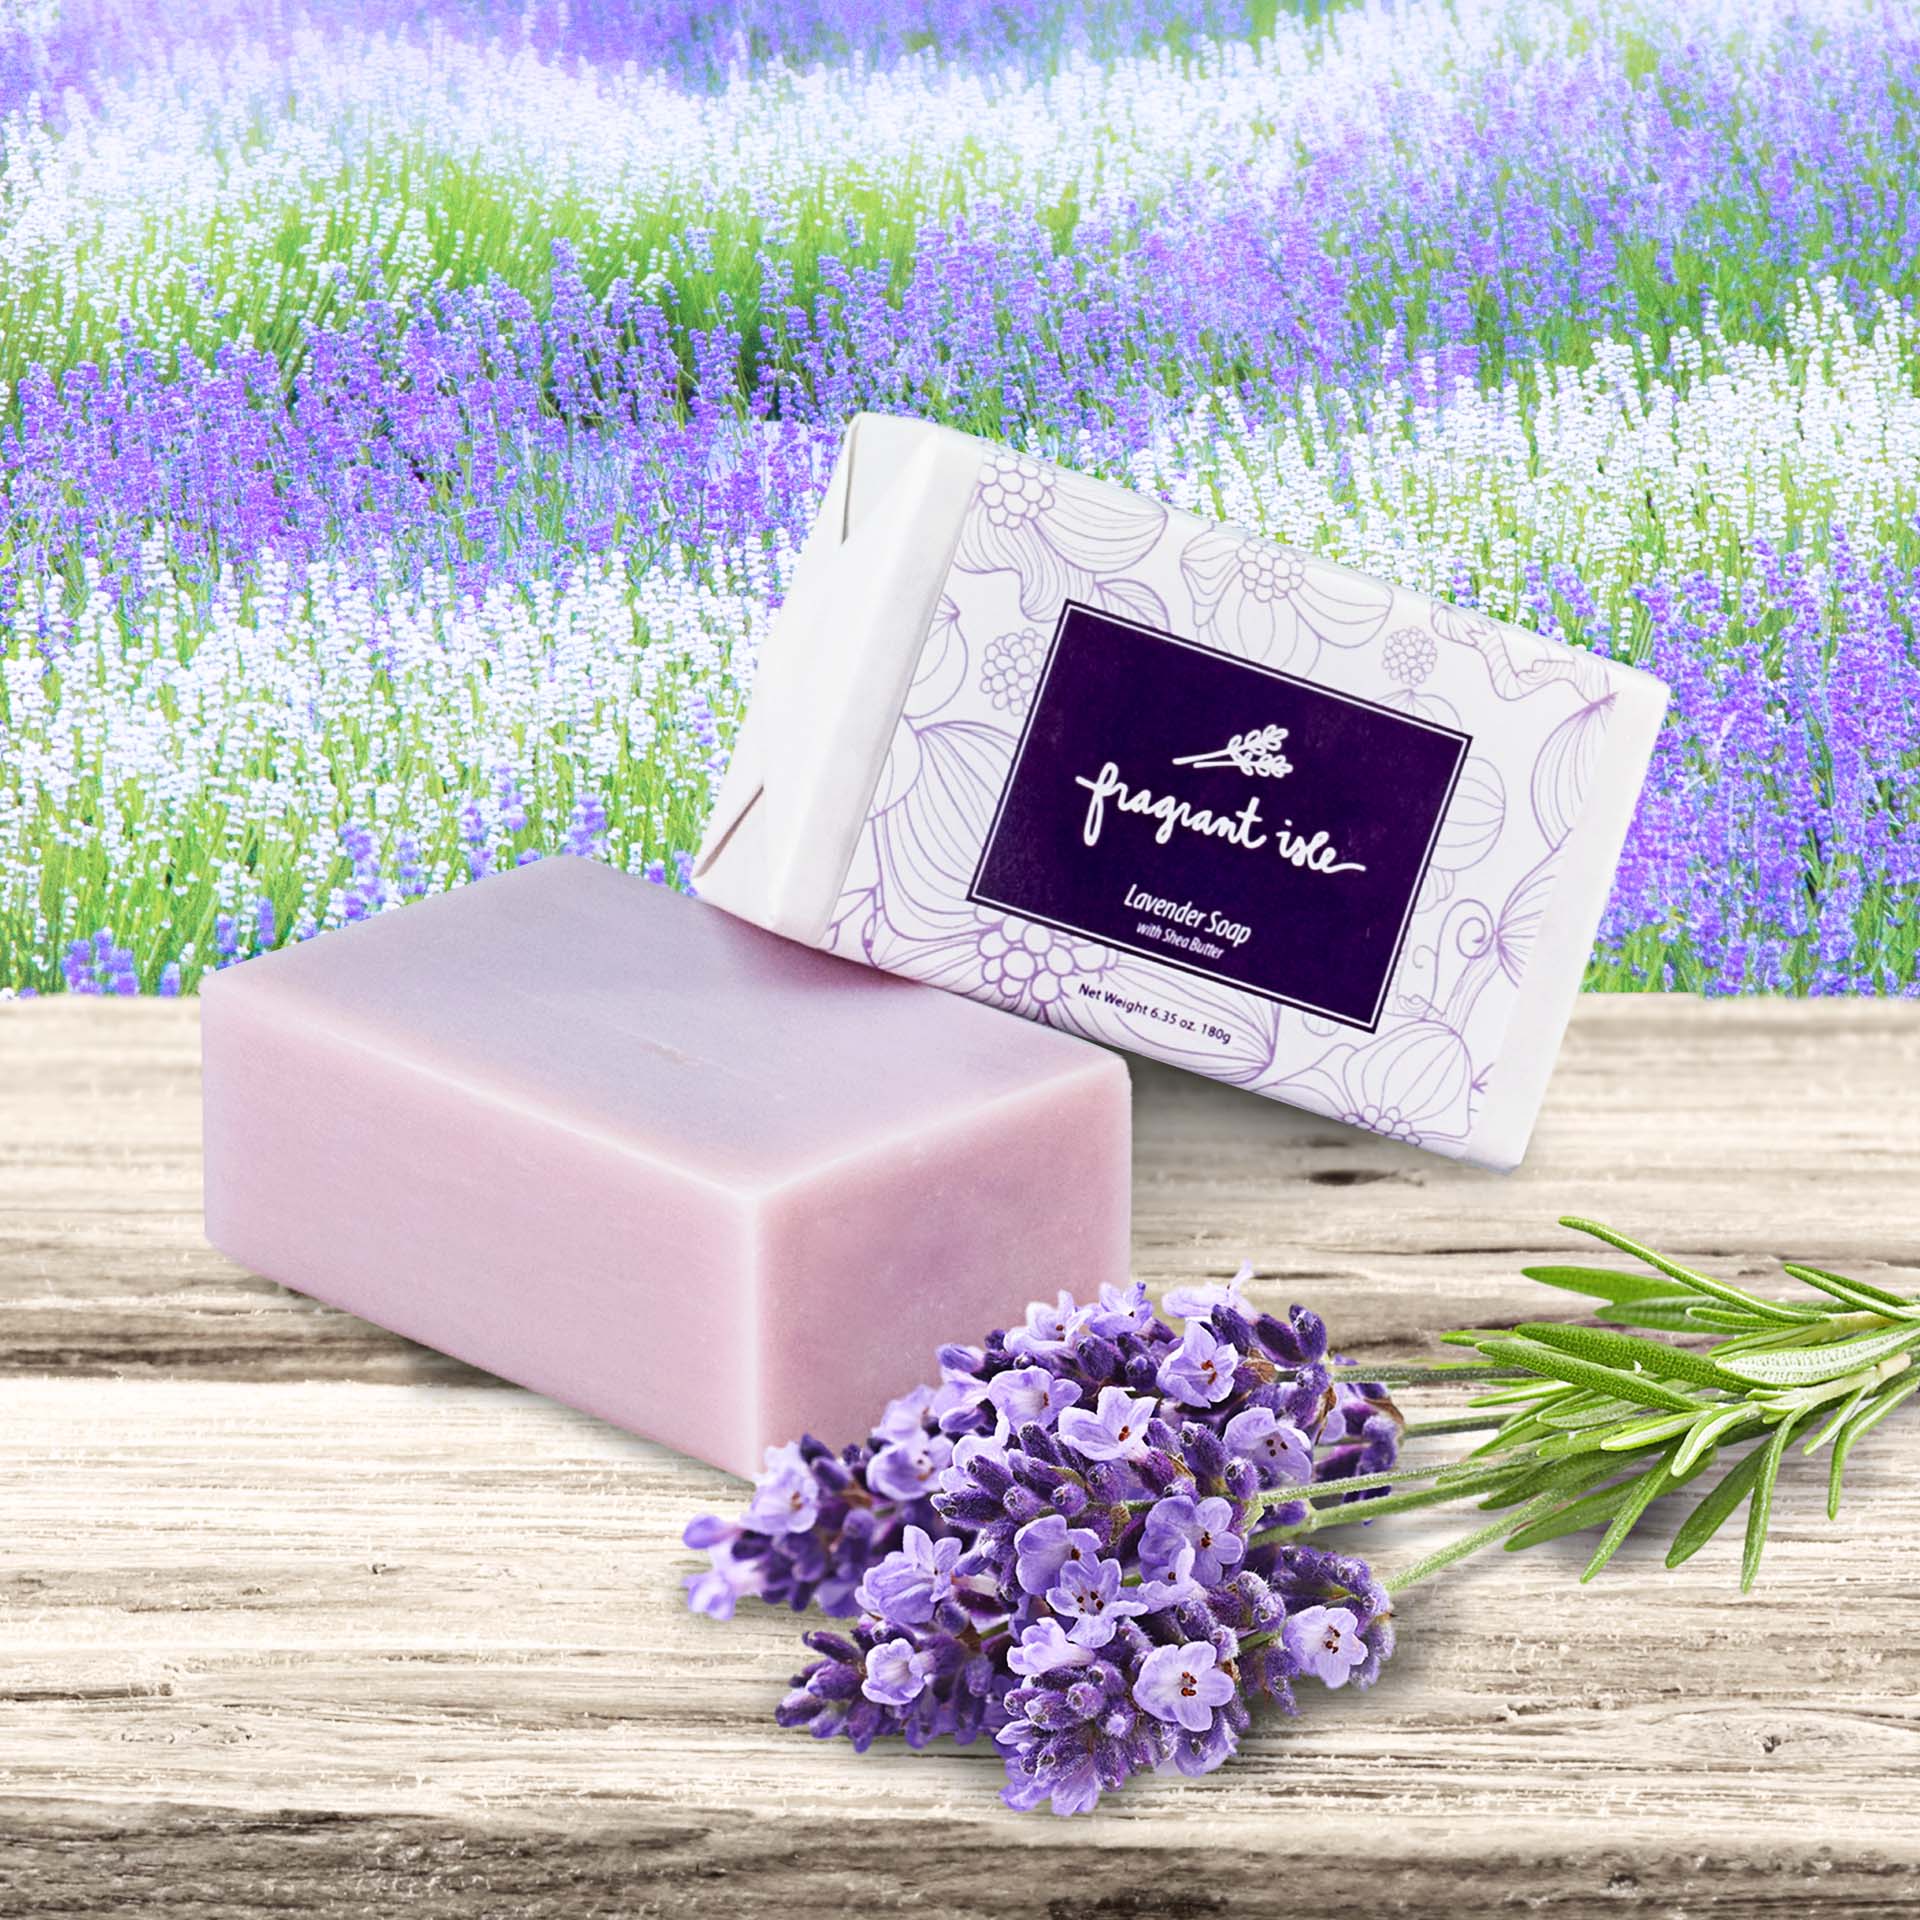 Lavender Shea Butter Soap - 6.35 oz – Fragrant Isle Lavender Farm & Shop